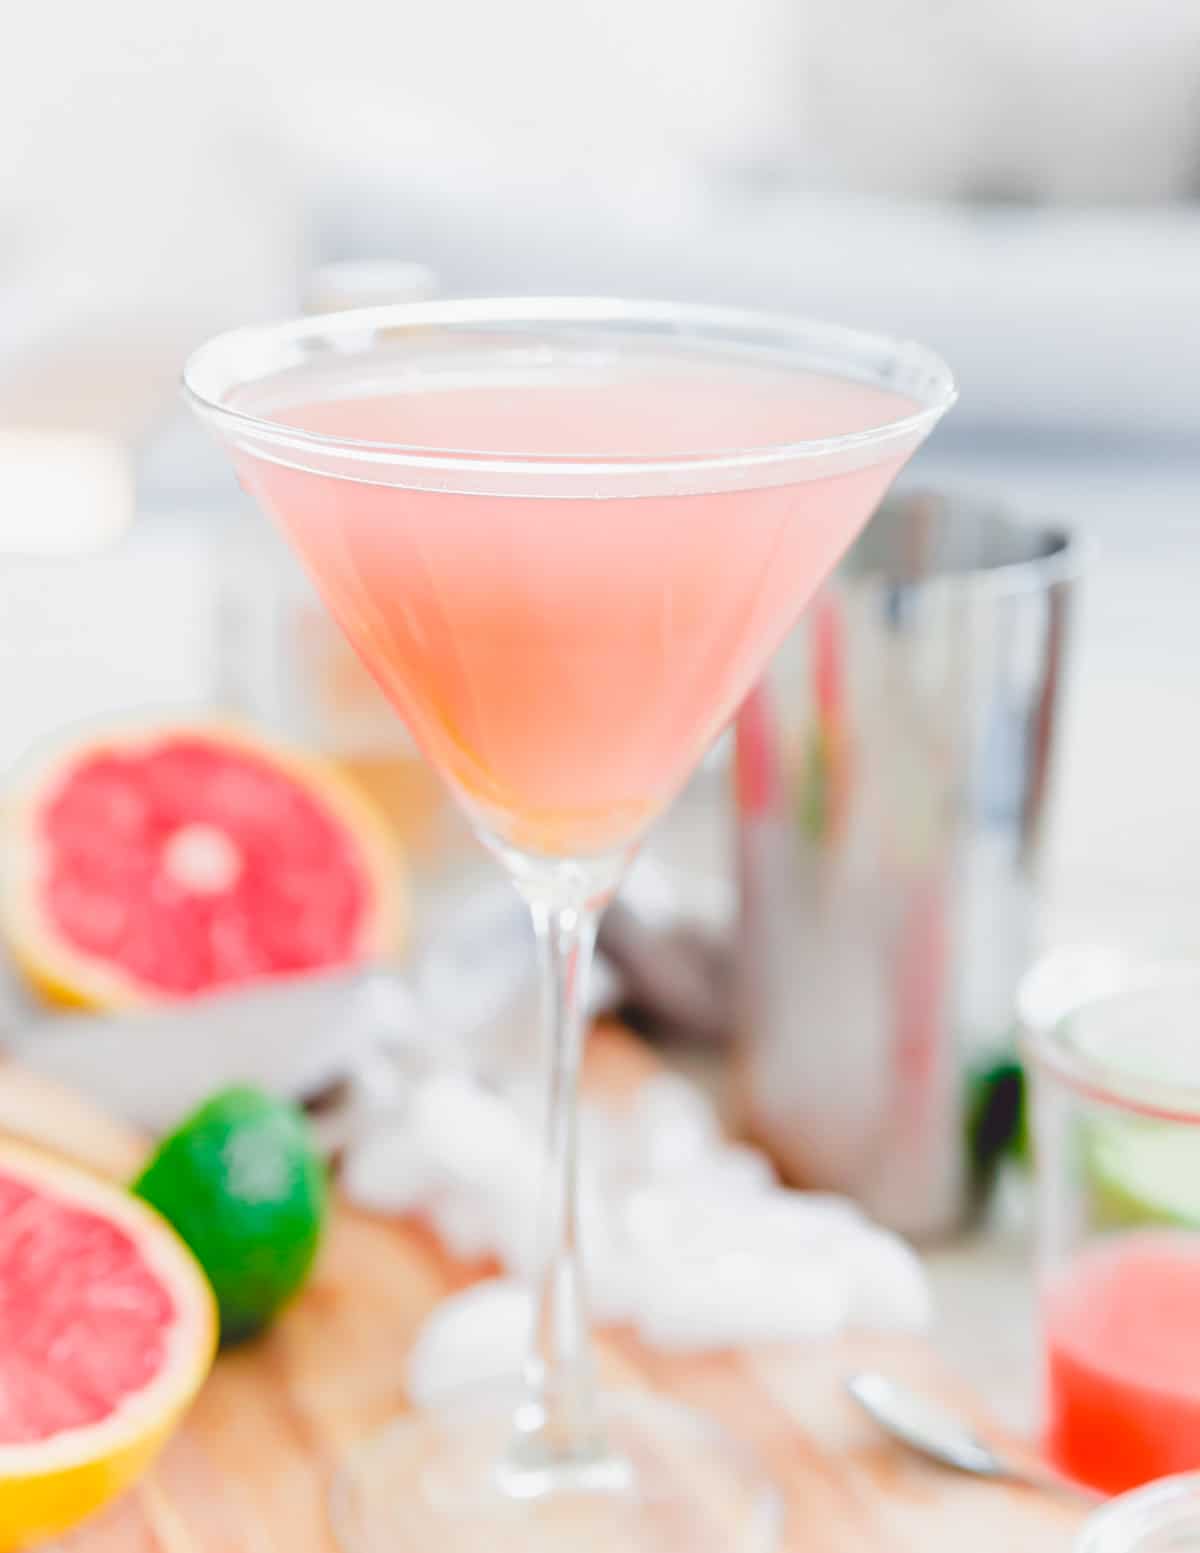 Grapefruit martini in a long stem martini glass.